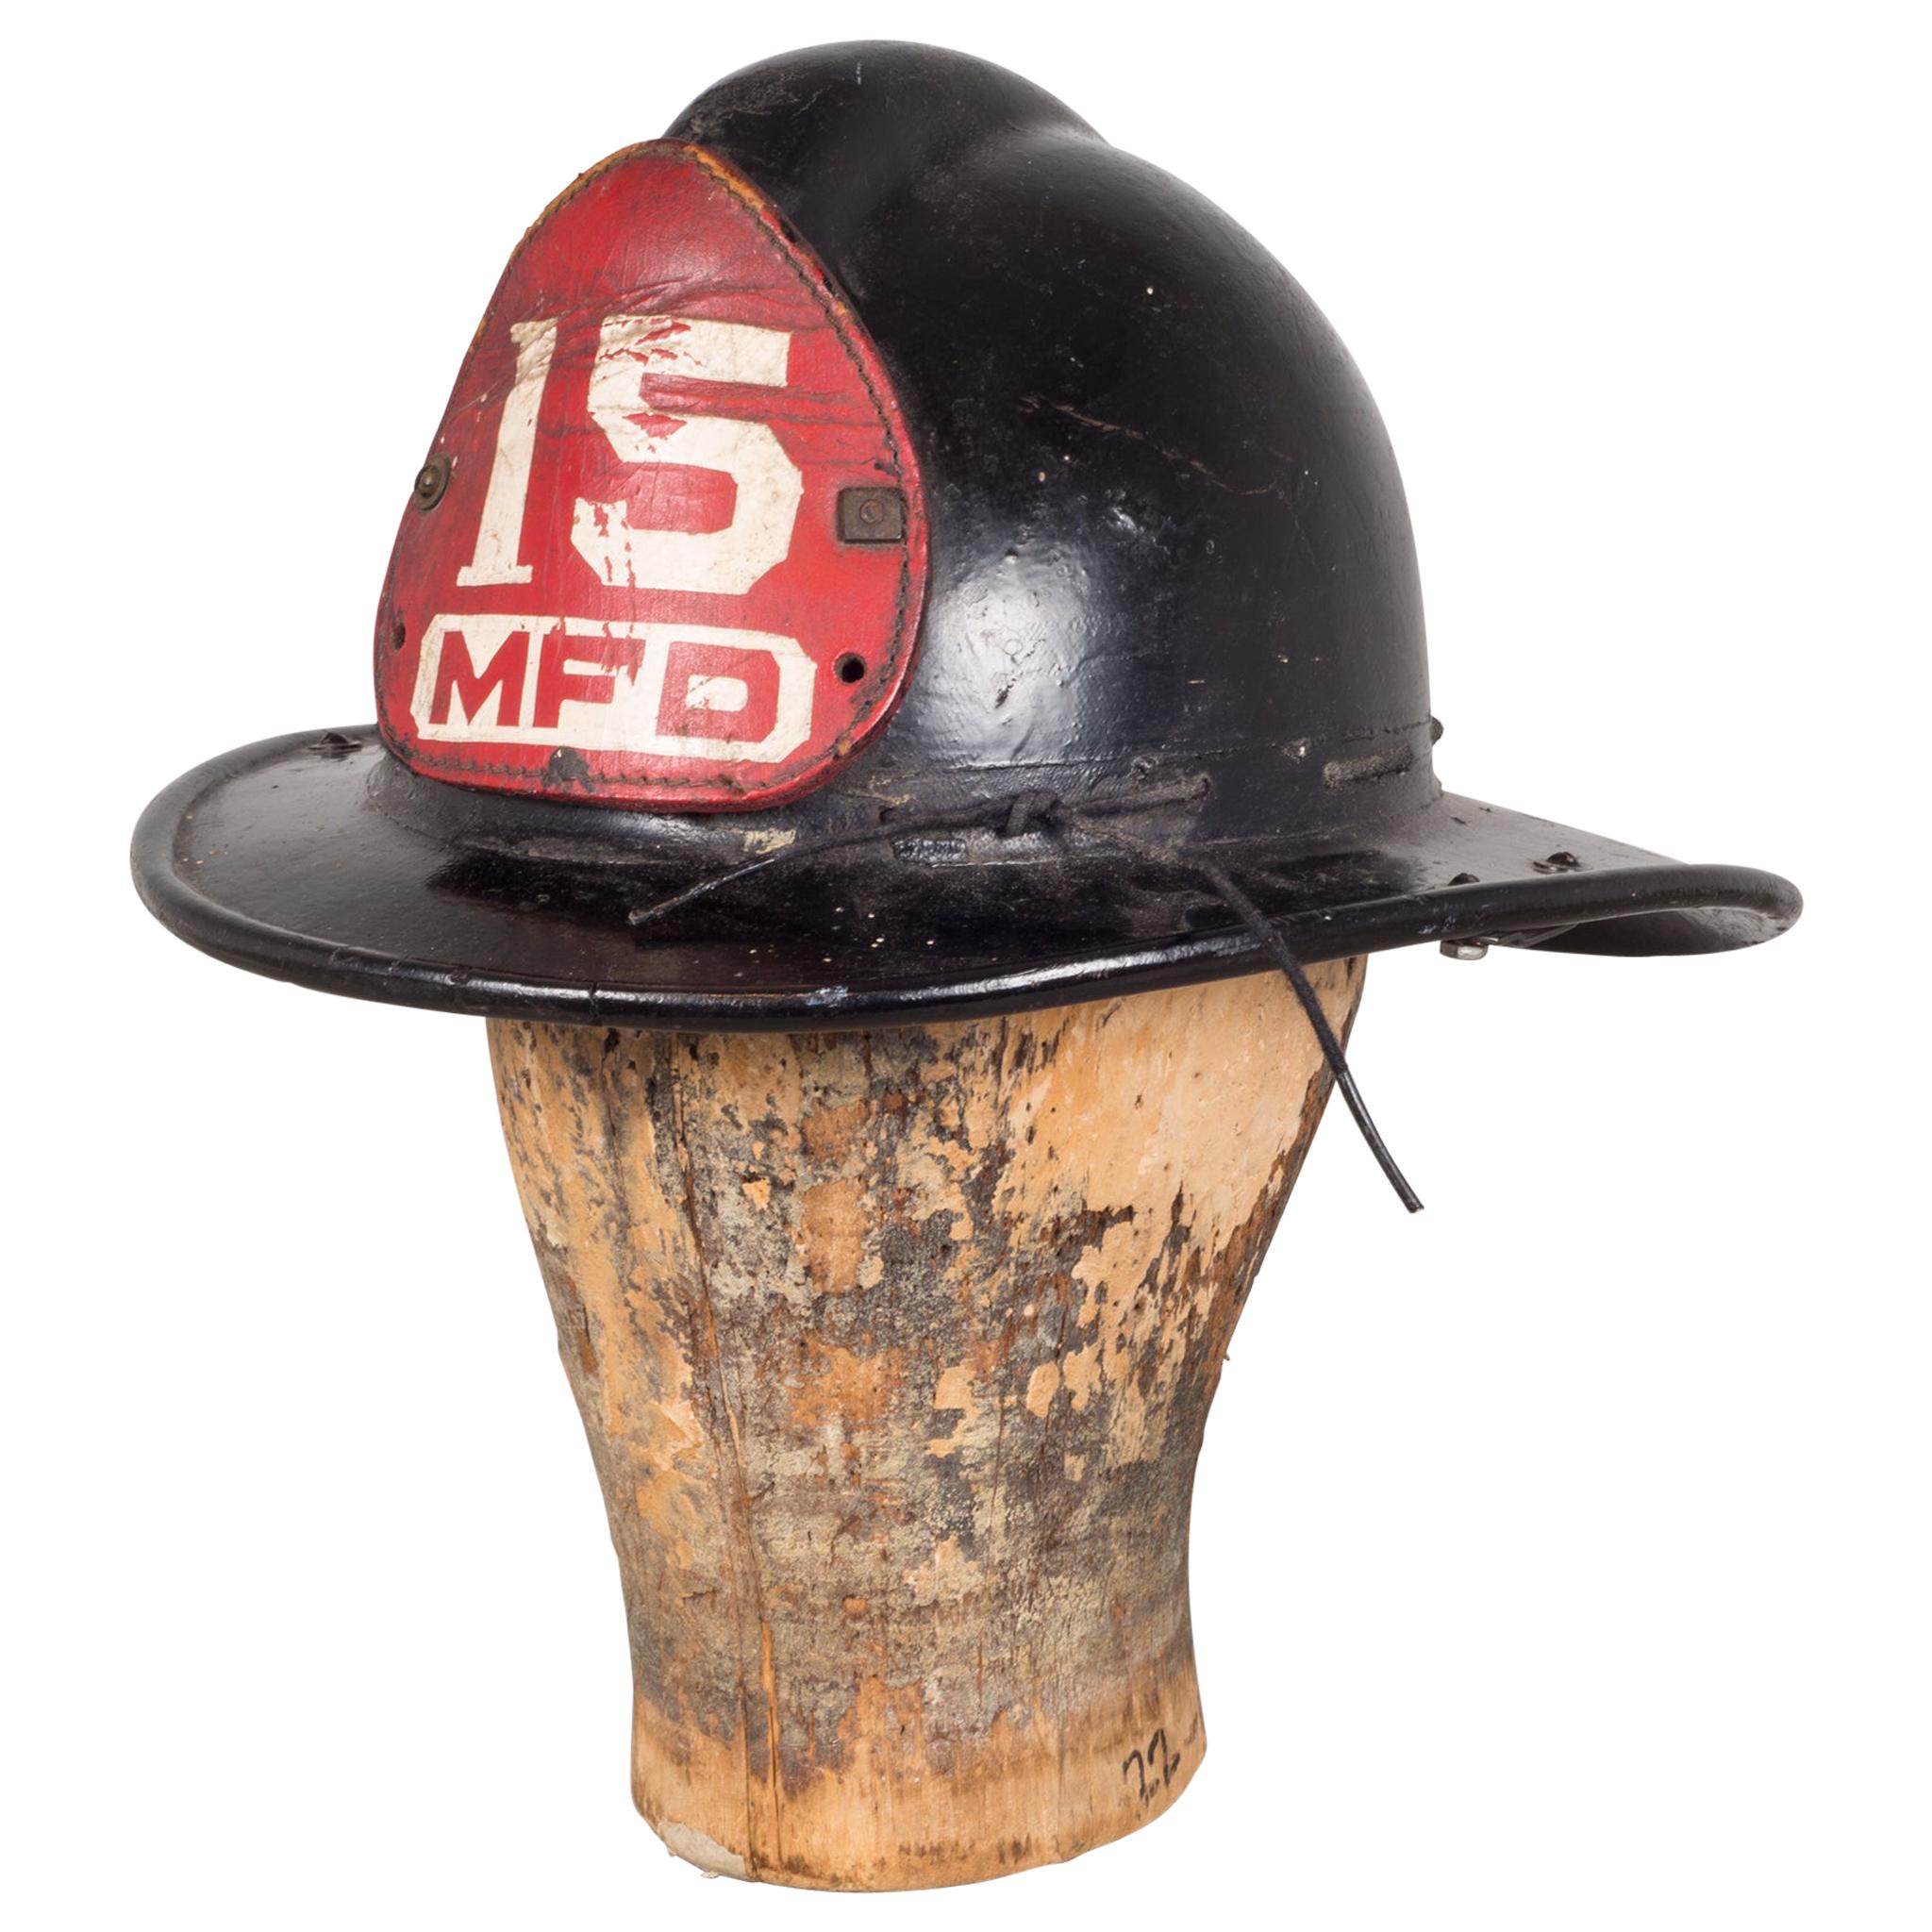 Black Fireman's Helmet with Leather Shield, circa 1940-1950